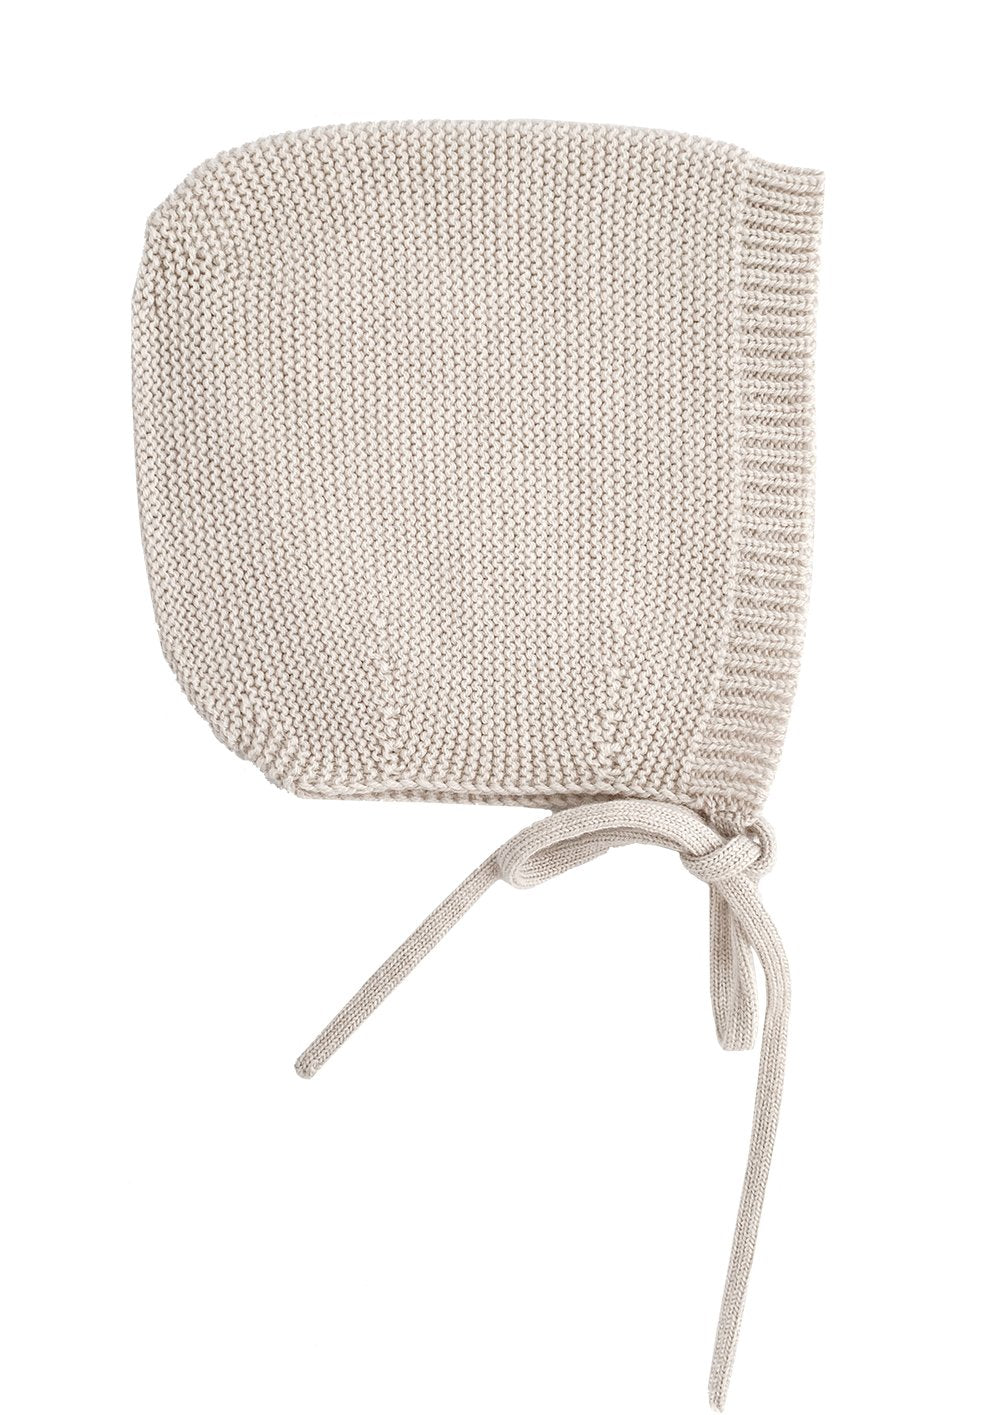 Hvid Knitwear Merino wool Off-white, white, ecru, beige knitted baby bonnet with tie